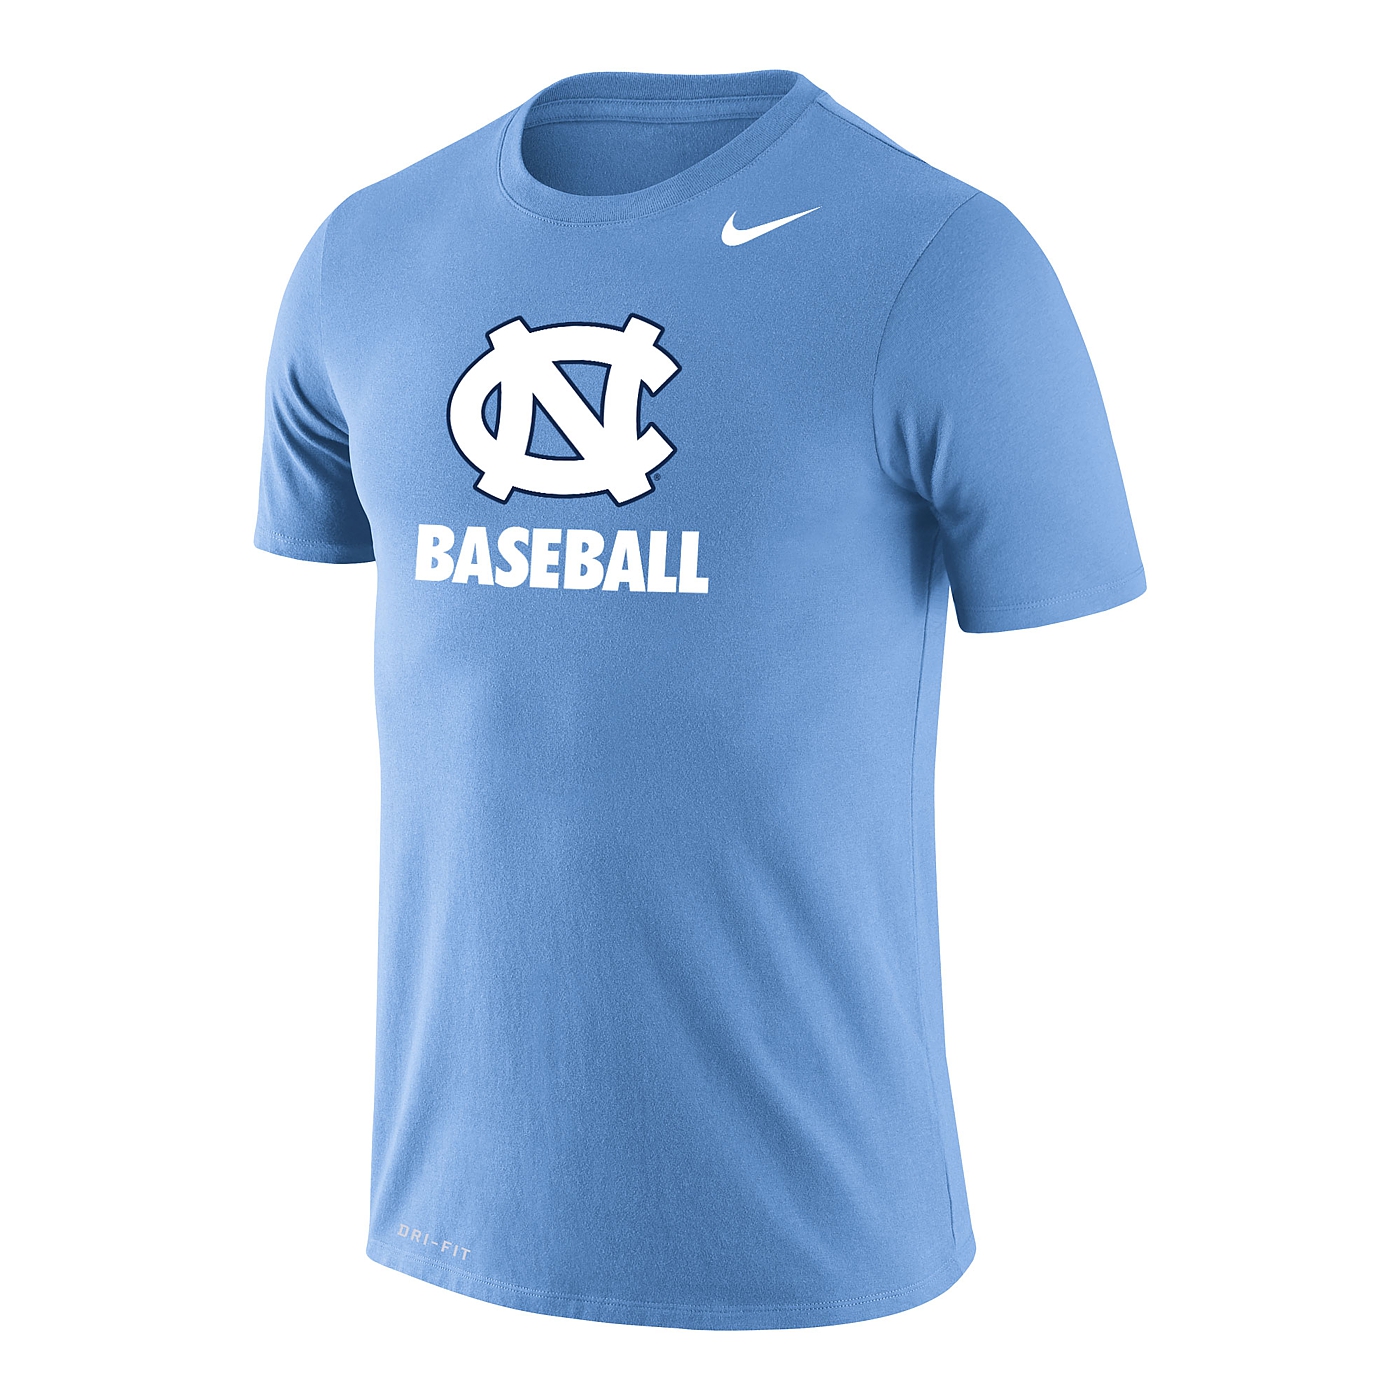 Johnny T-shirt - North Carolina Tar Heels - Baseball - Nike Baseball ...